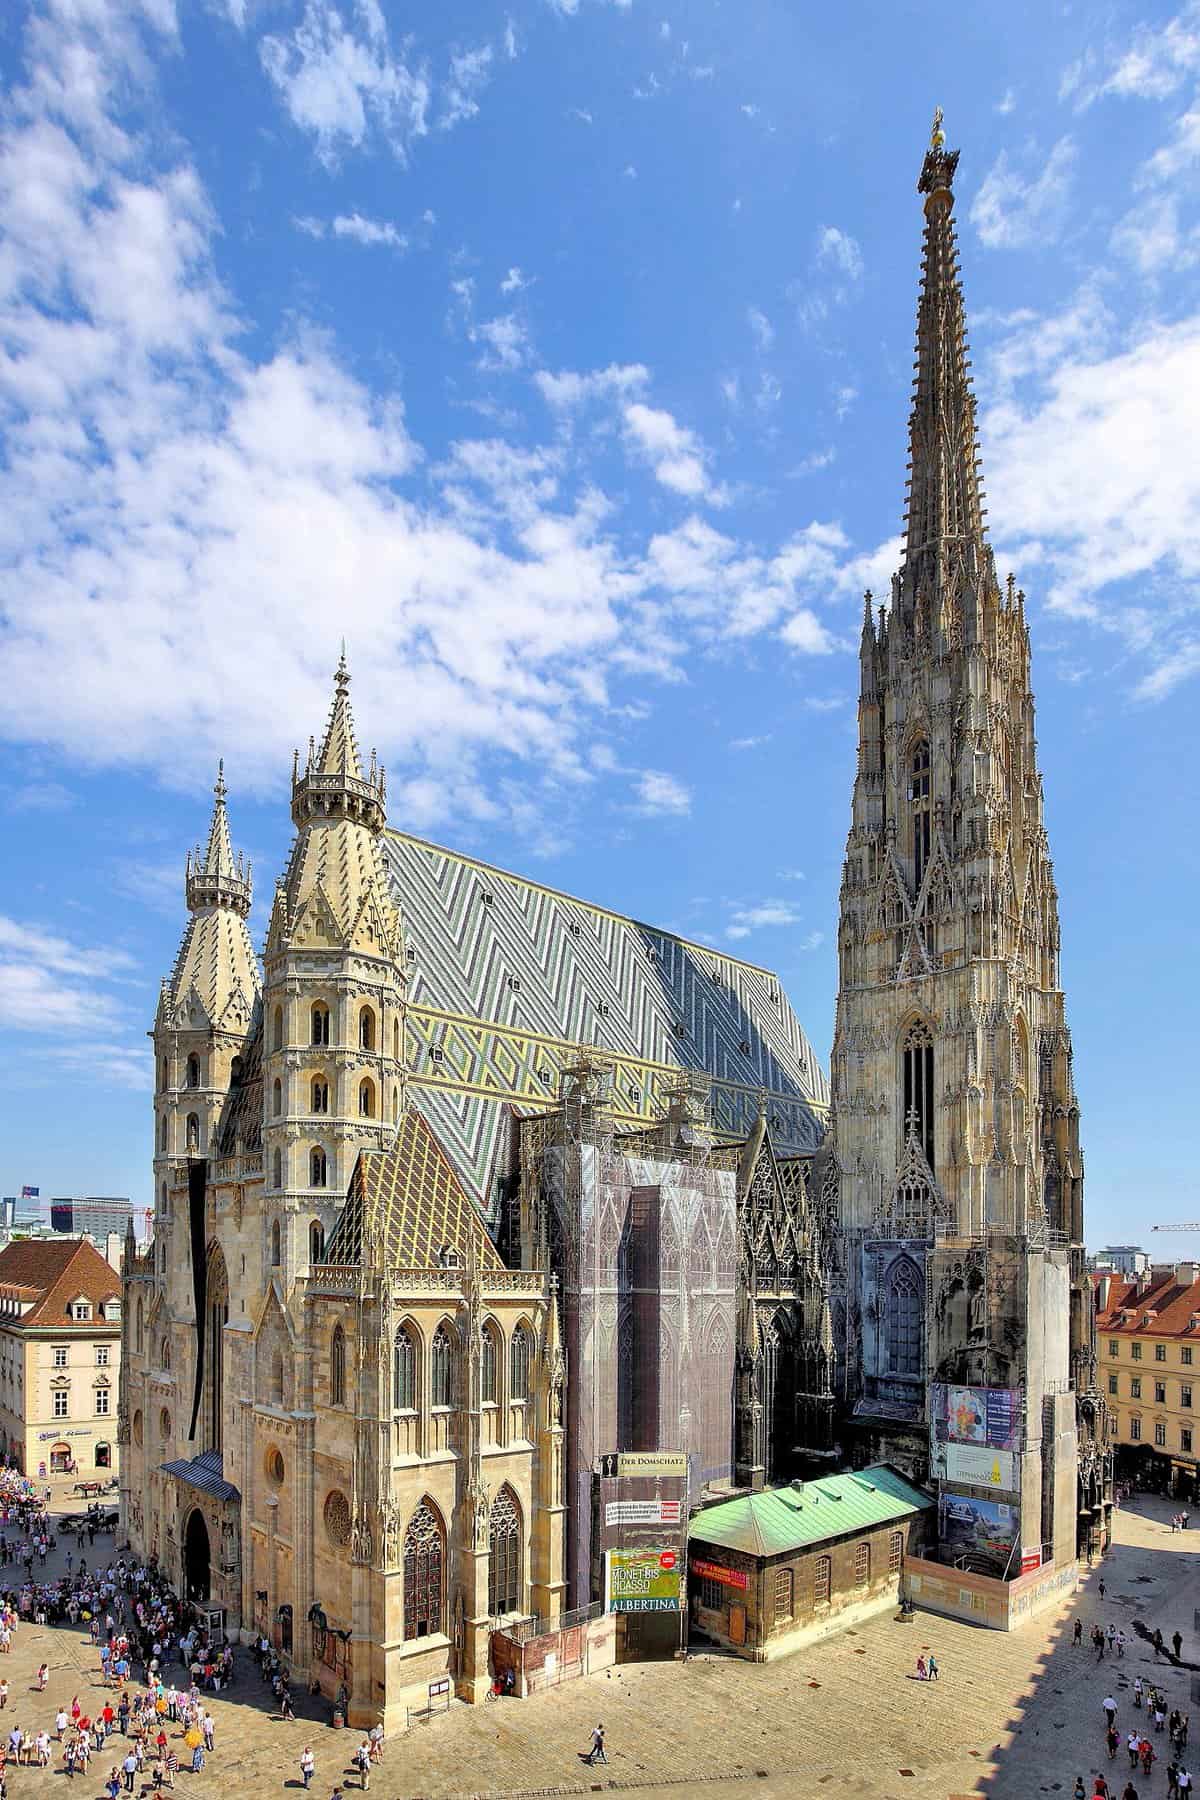 St. Stephen’s Cathedral Vienna